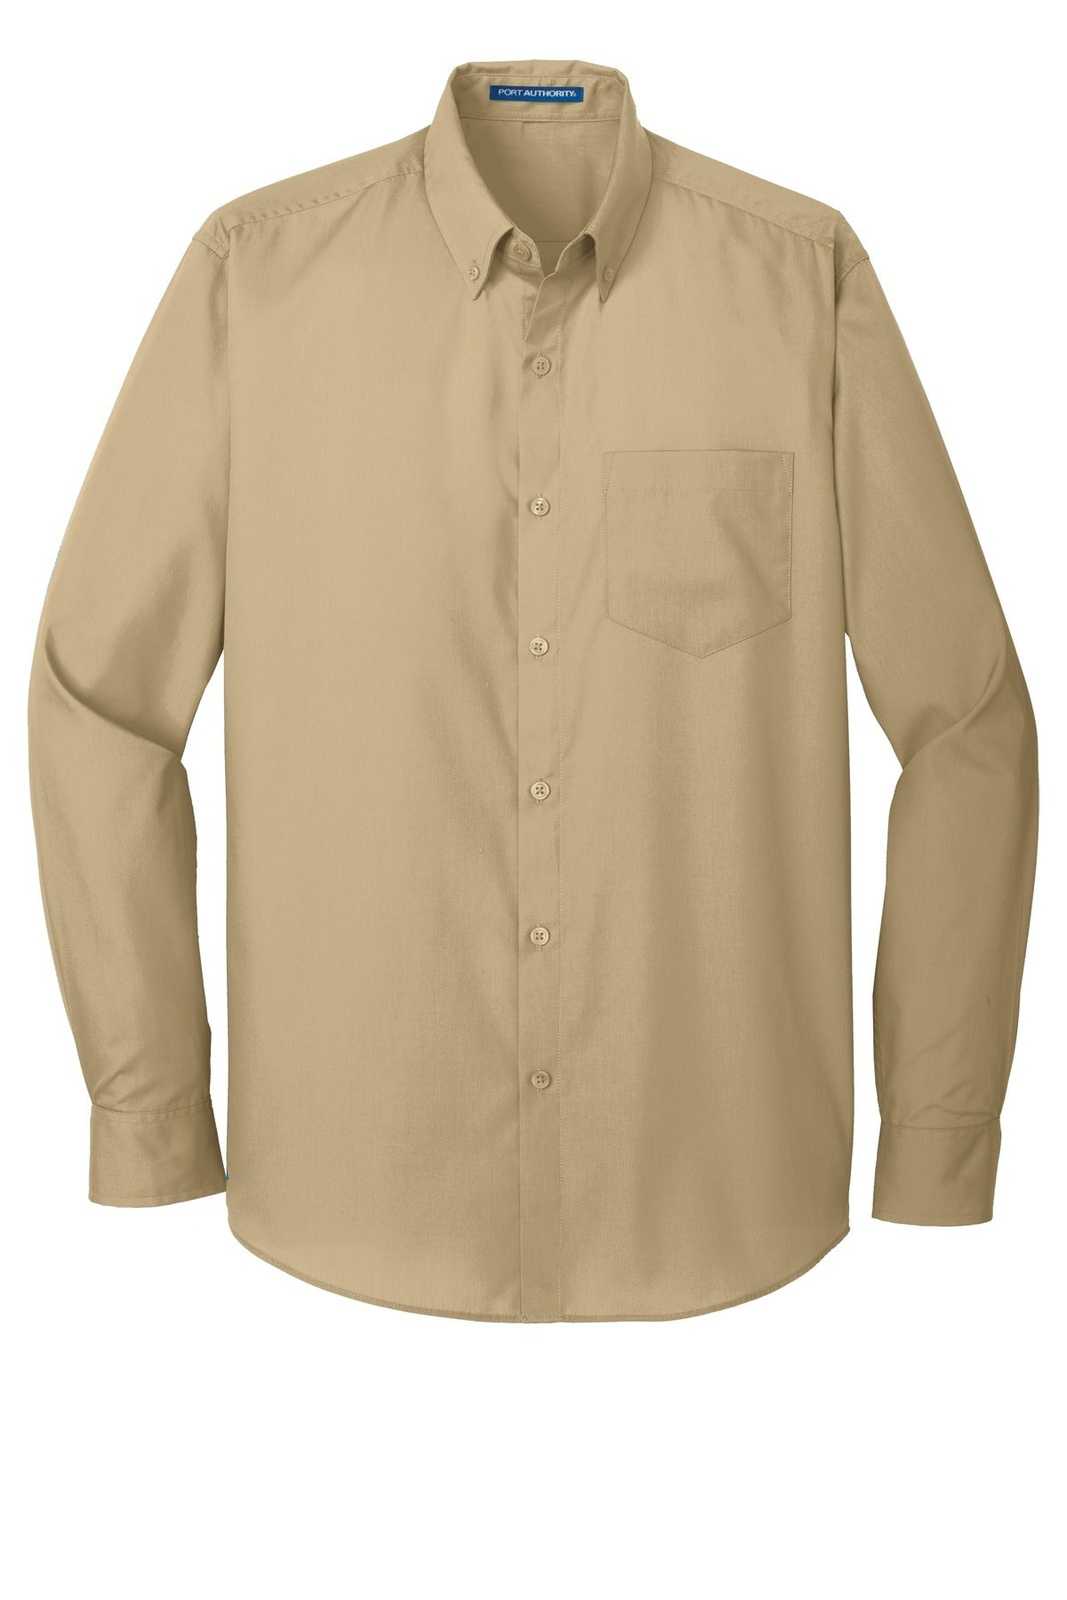 Port Authority W100 Long Sleeve Carefree Poplin Shirt - Wheat - HIT a Double - 5